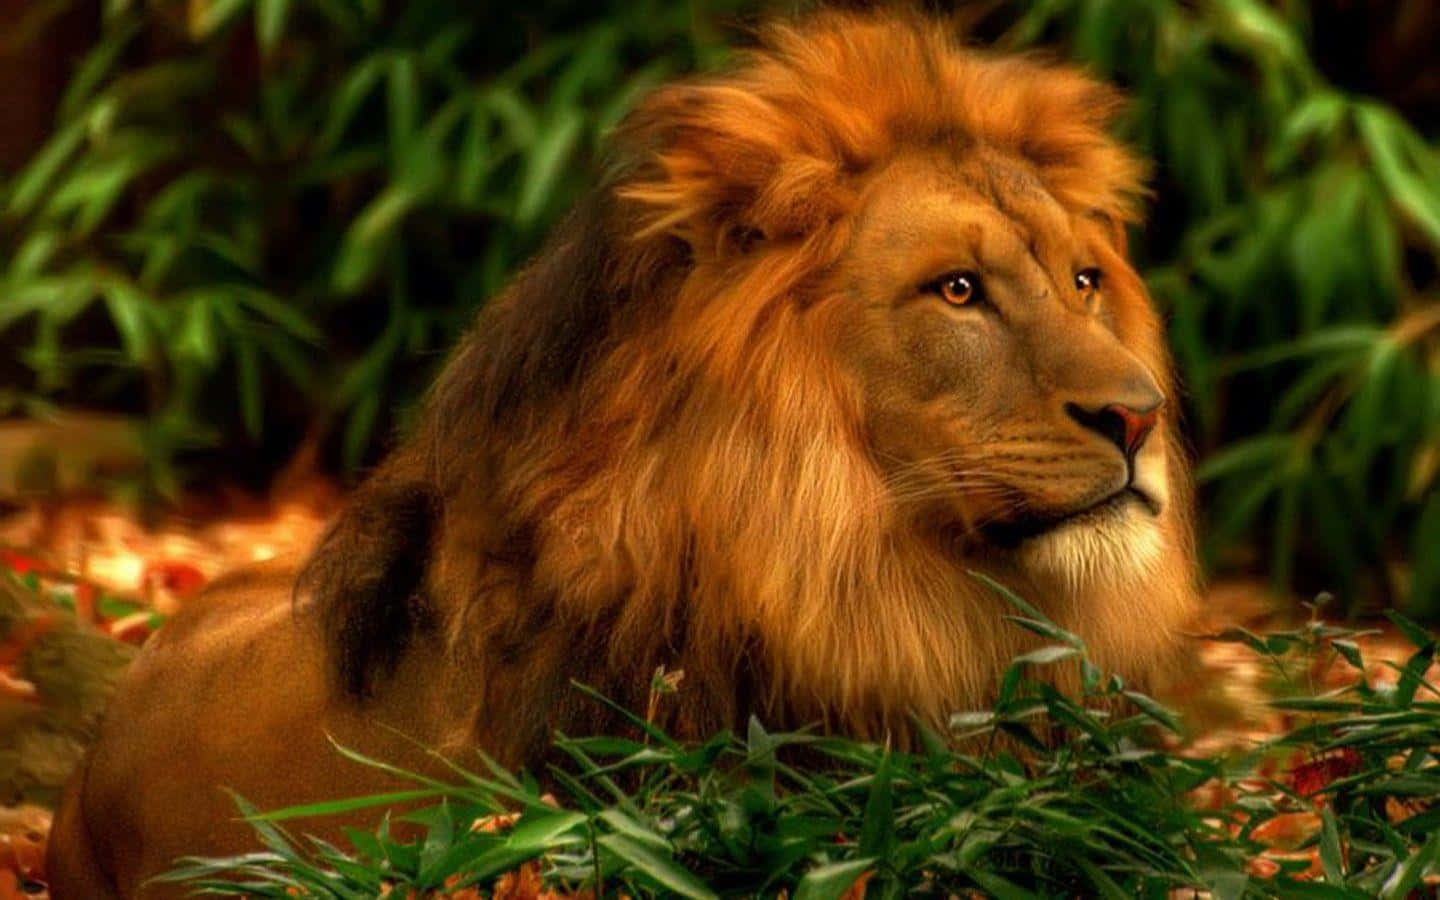 Majestic Lion Roaring in His Natural Habitat